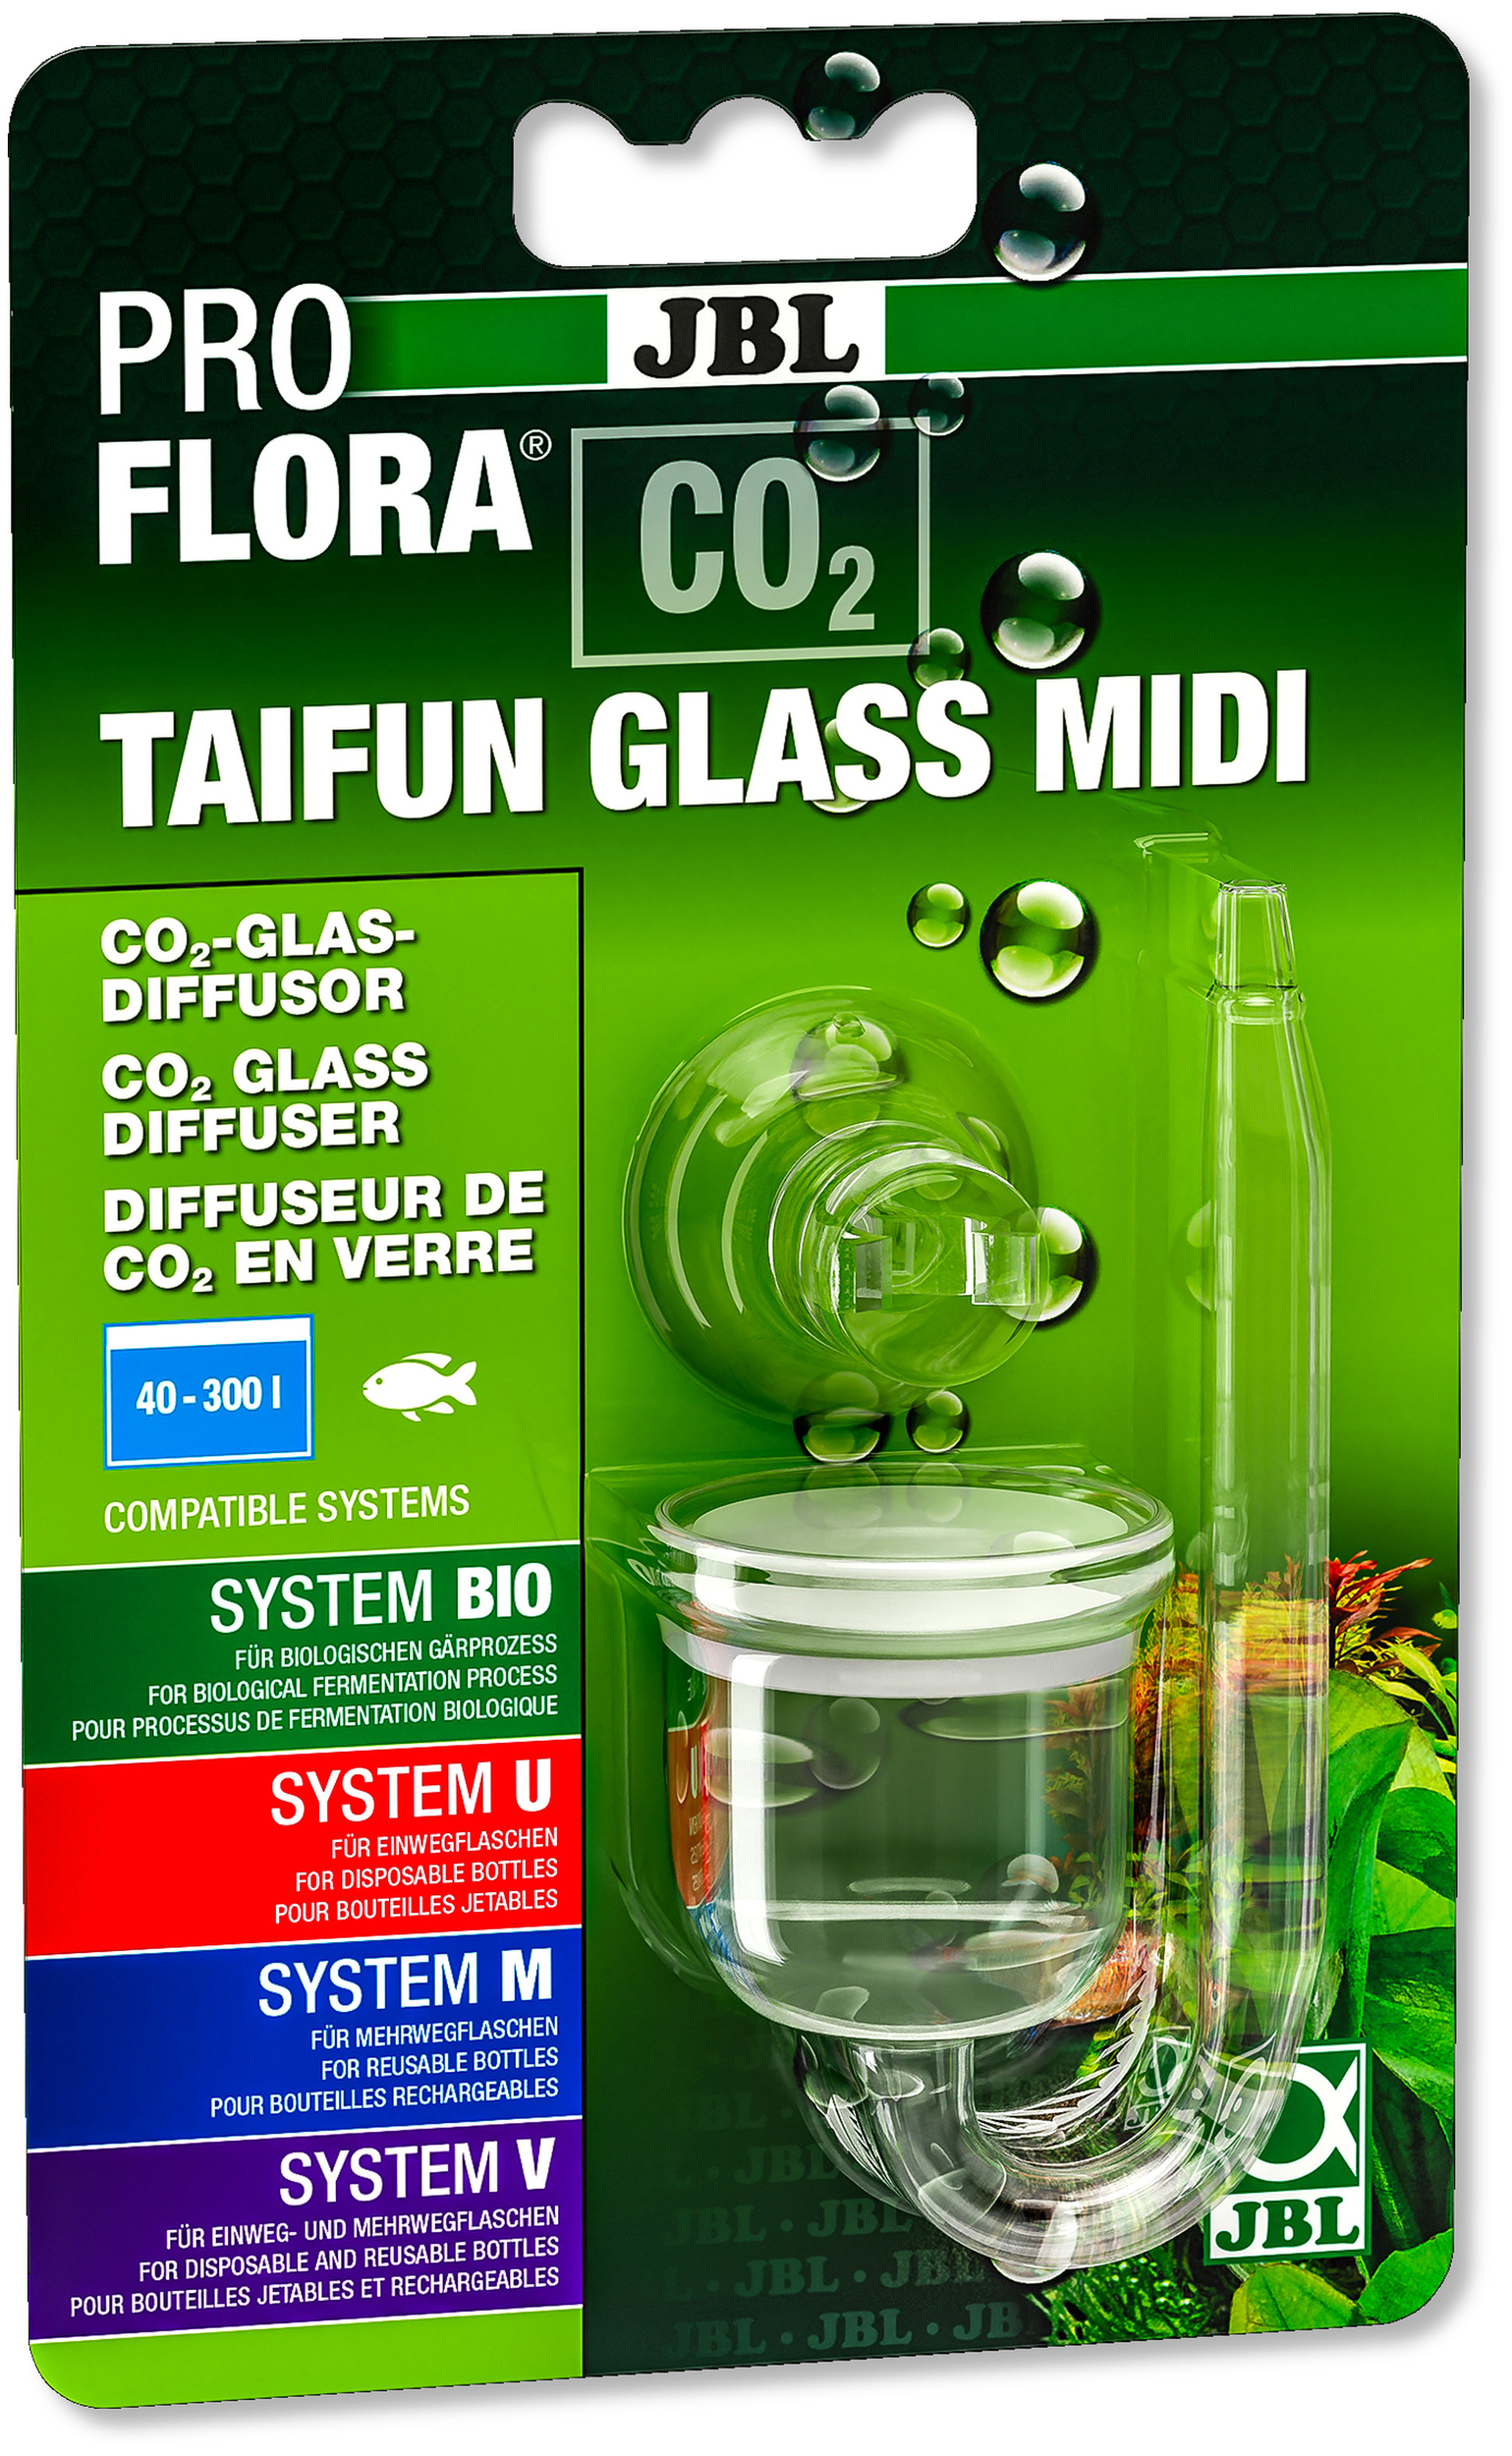 JBL Proflora CO2 Taifun Glass Midi mini-diffuseur de CO2 haute perfomance pour aquarium de 40 à 300 L